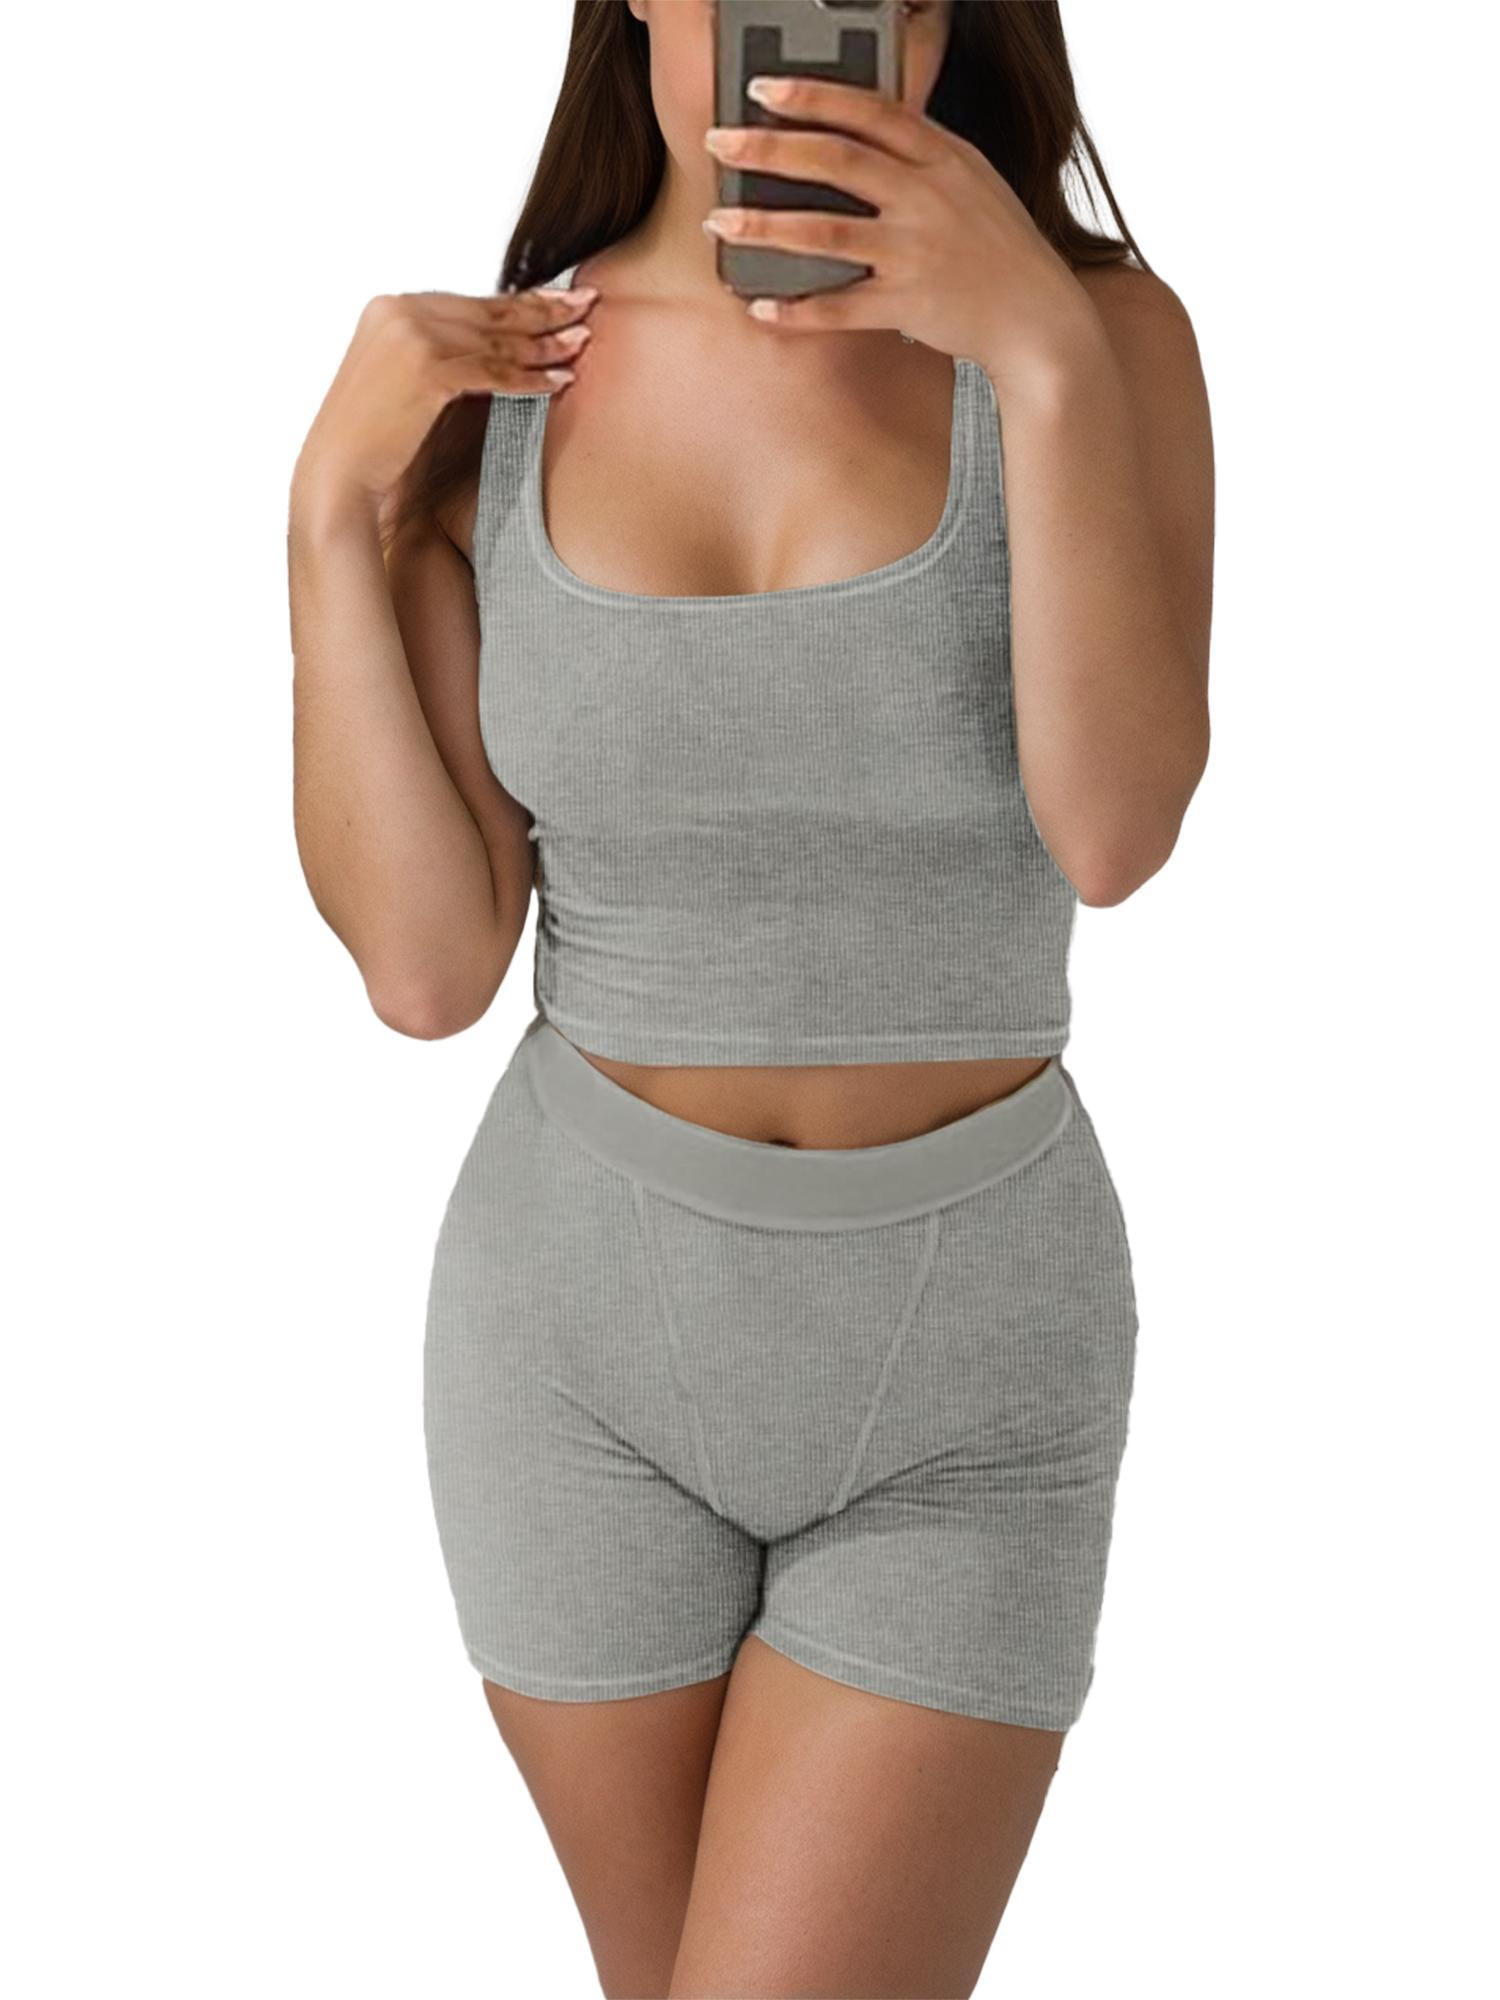 Plus Size Outfits for Women 2 Piece Cotton Linen Lightweight Summer Casual  Loose Tops Wide Leg Pants Lounge Sets (XX-Large, Orange) 